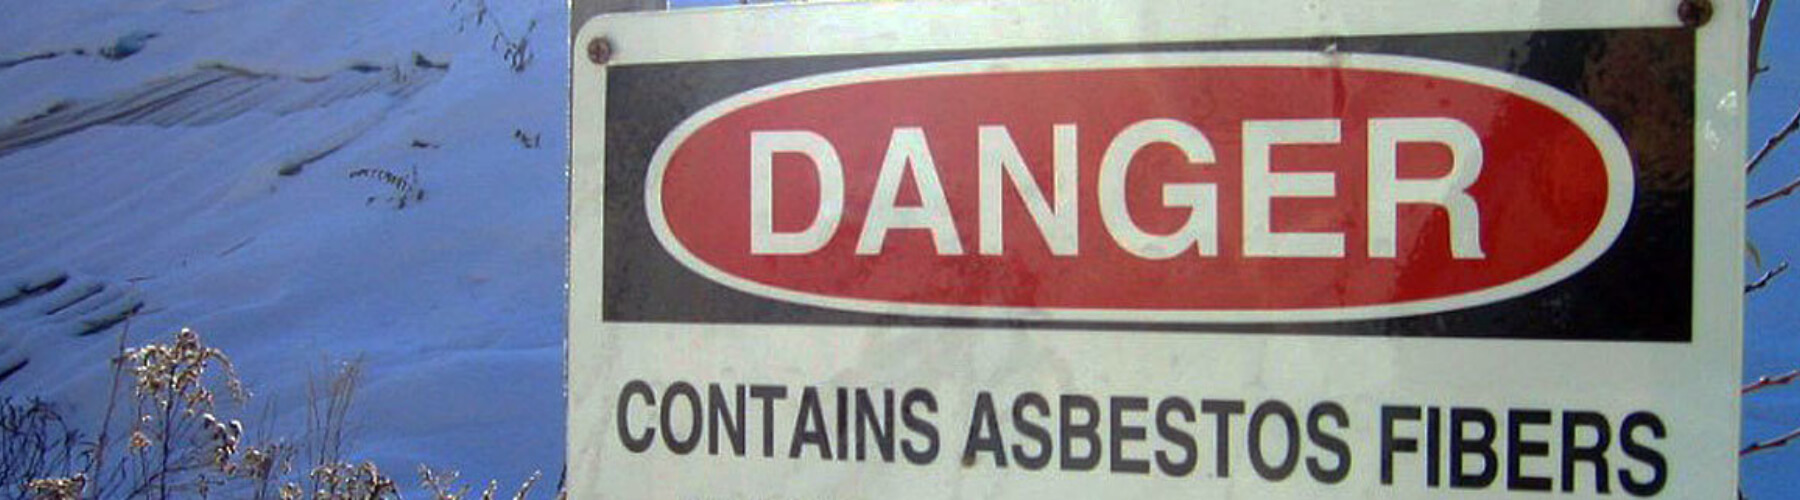 Danger sign, contains asbestos fibers